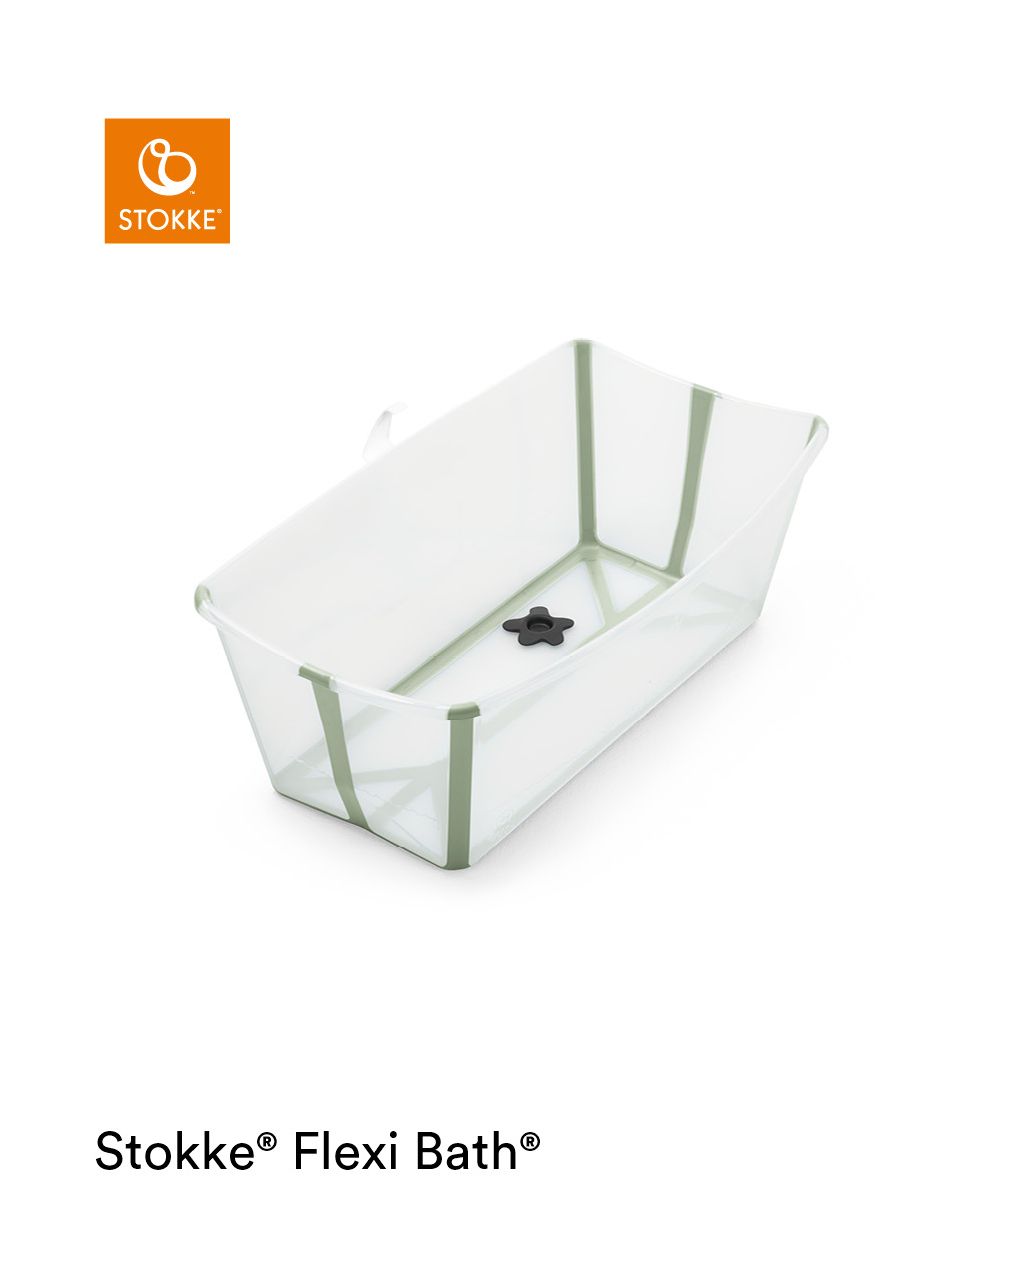 Stokke® flexxi bath® trasparent green - Stokke